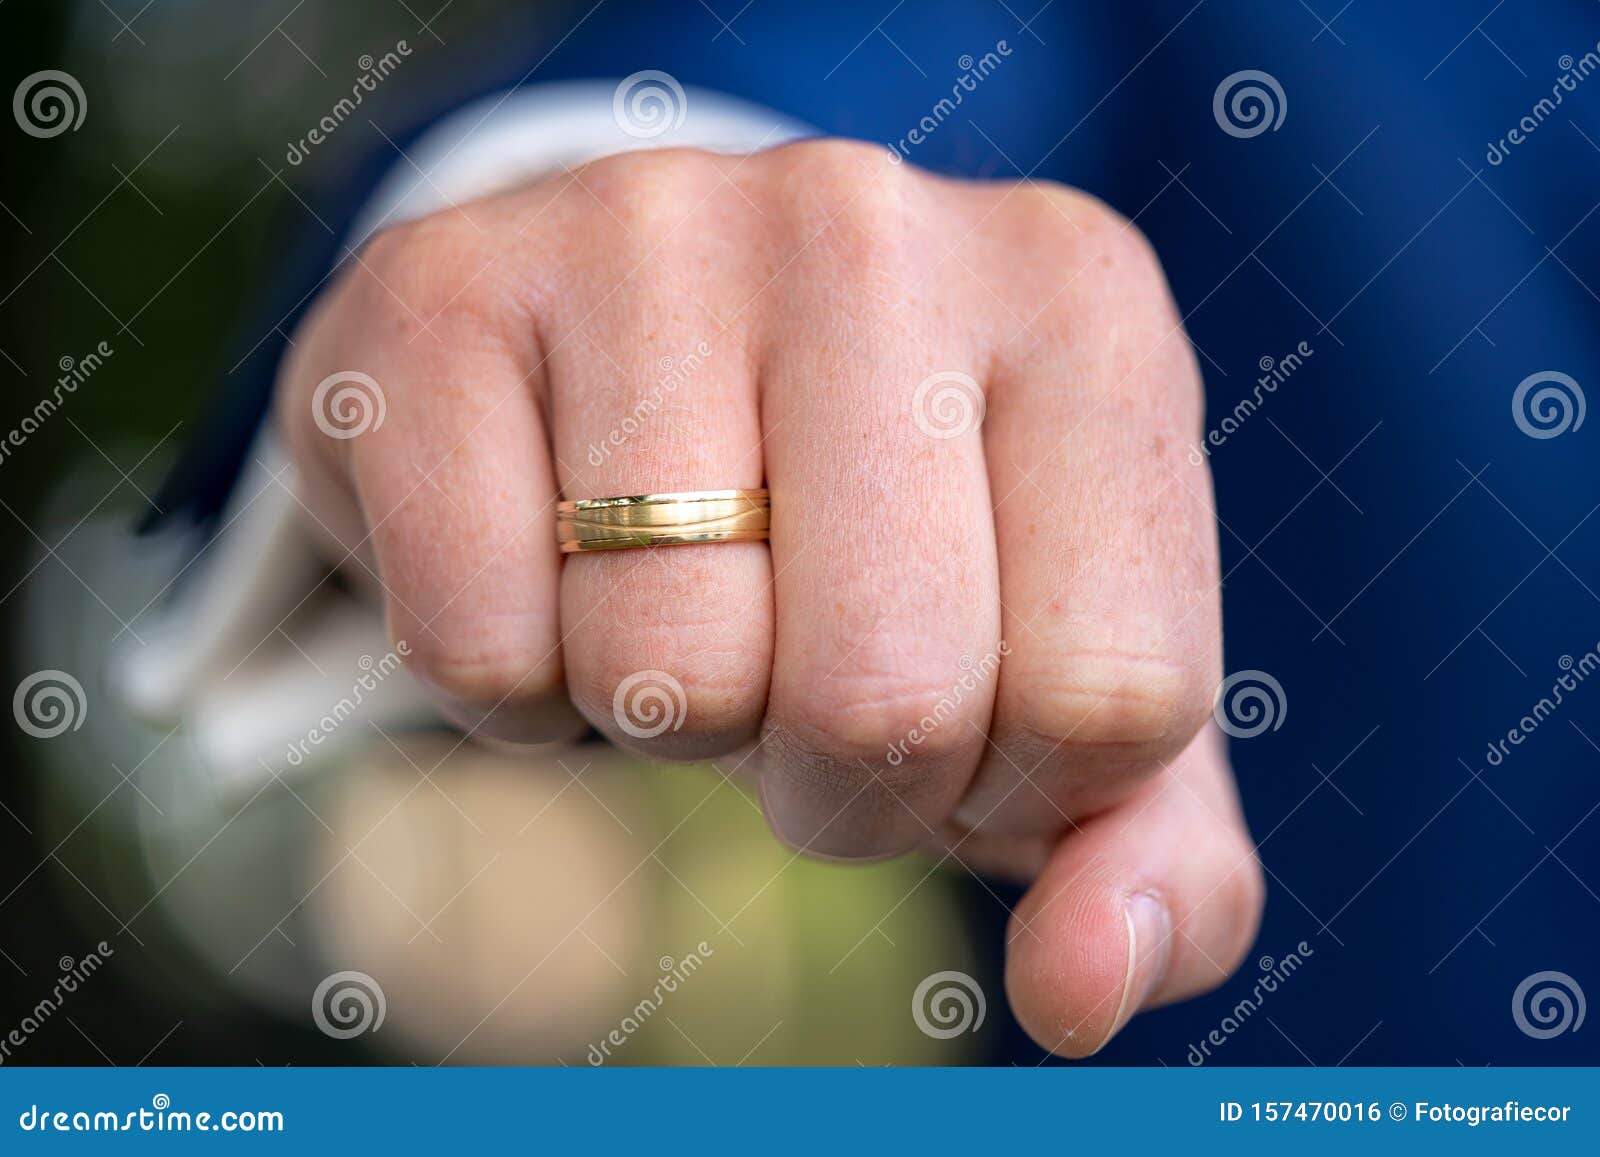 Mens Wedding Band, Tungsten Ring Yellow Gold 18K, Wedding Ring 8mm, Pr –  Bellyssa Jewelry